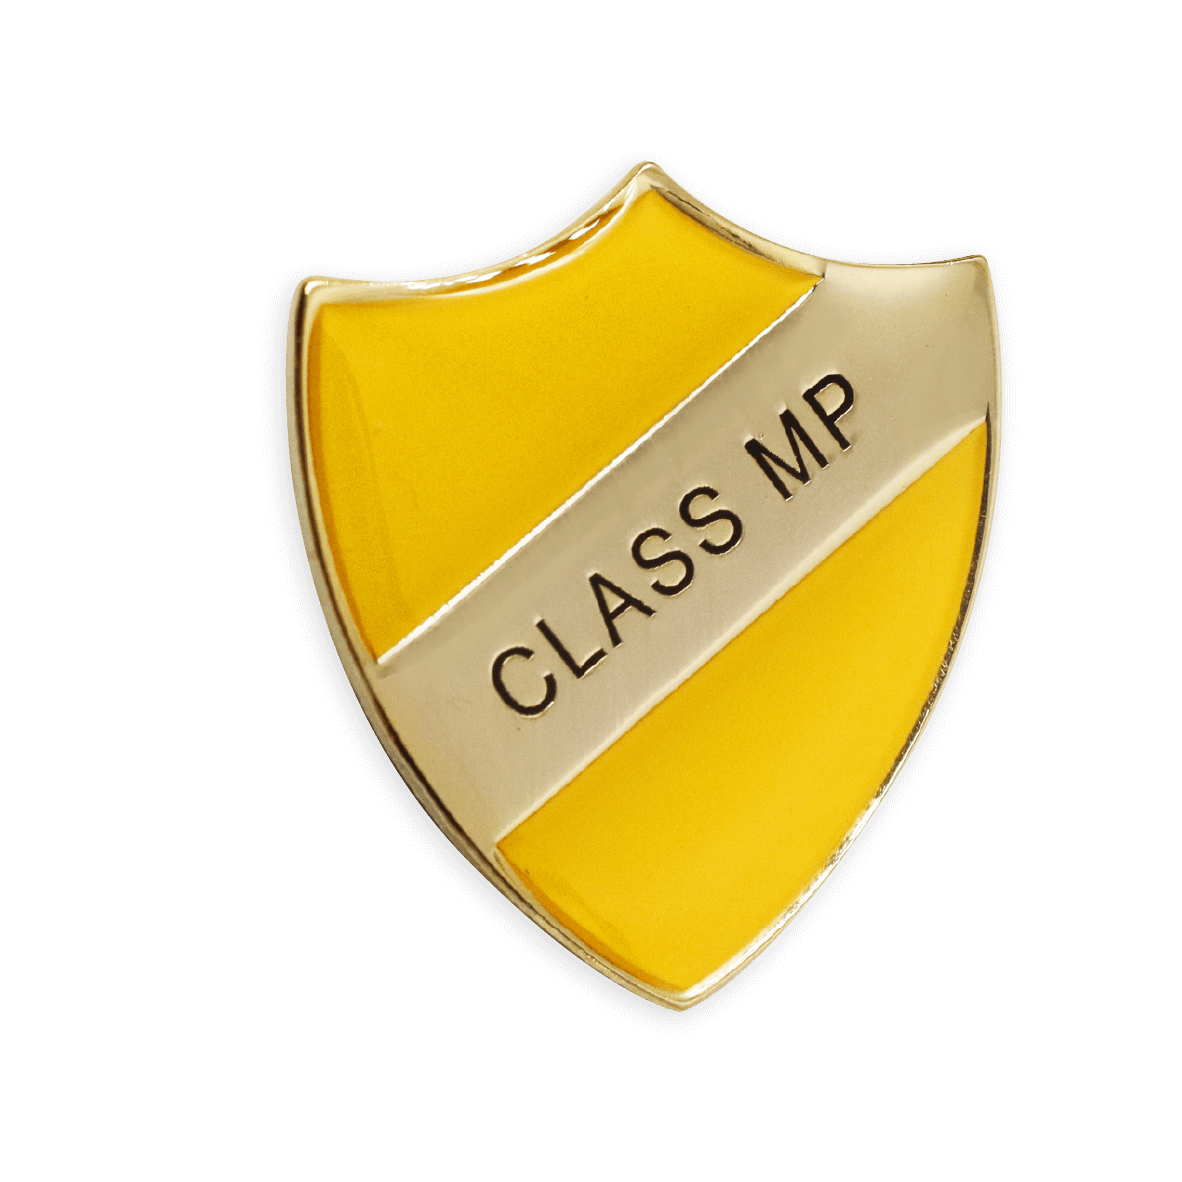 Class MP shield badge